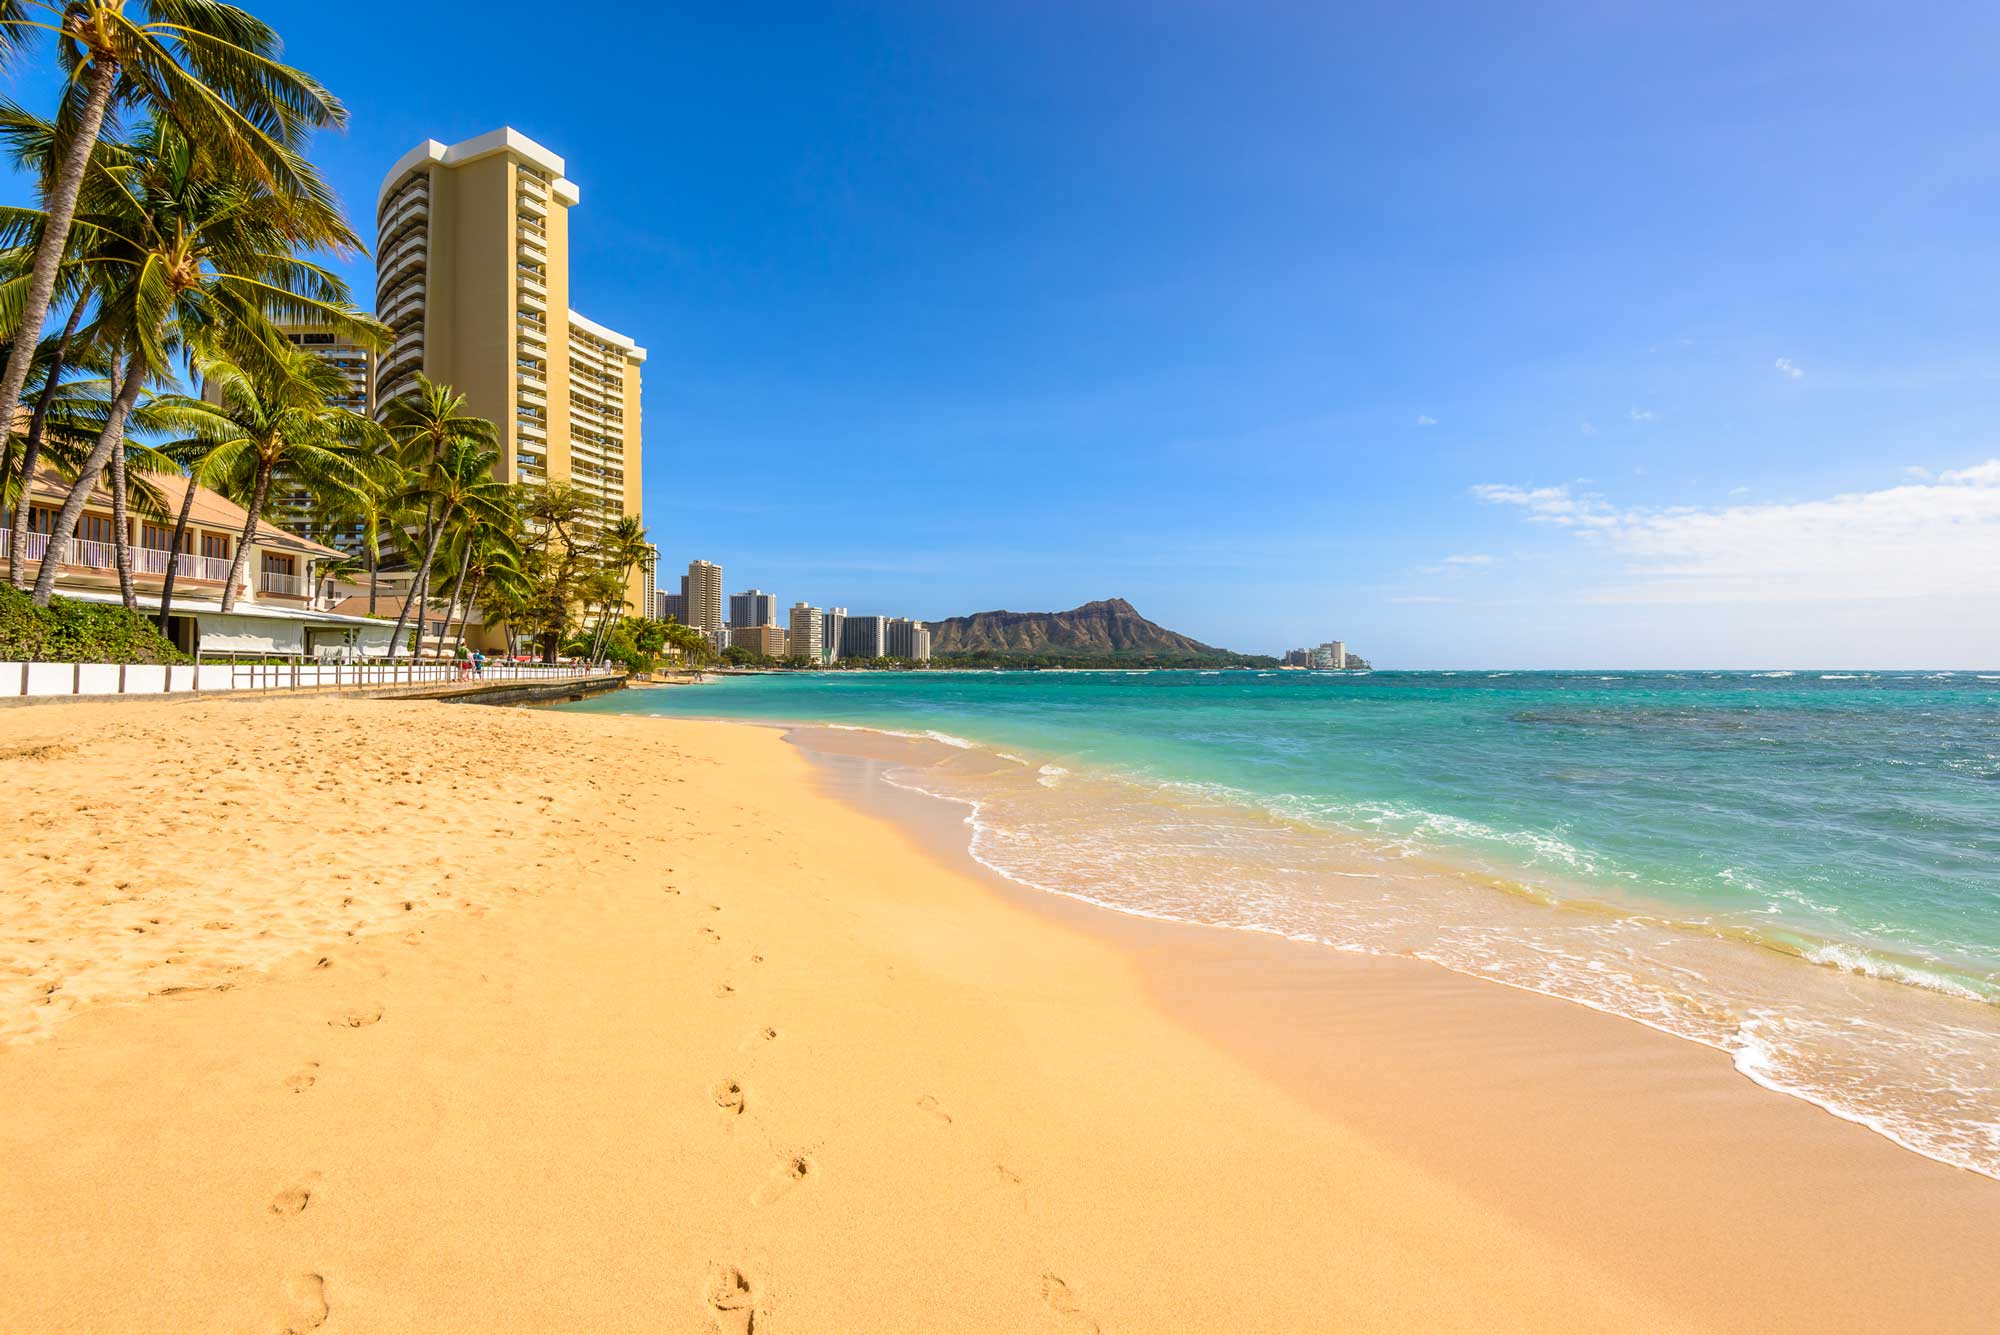 Best Wedding Locations for 2014: Oahu, Hawaii